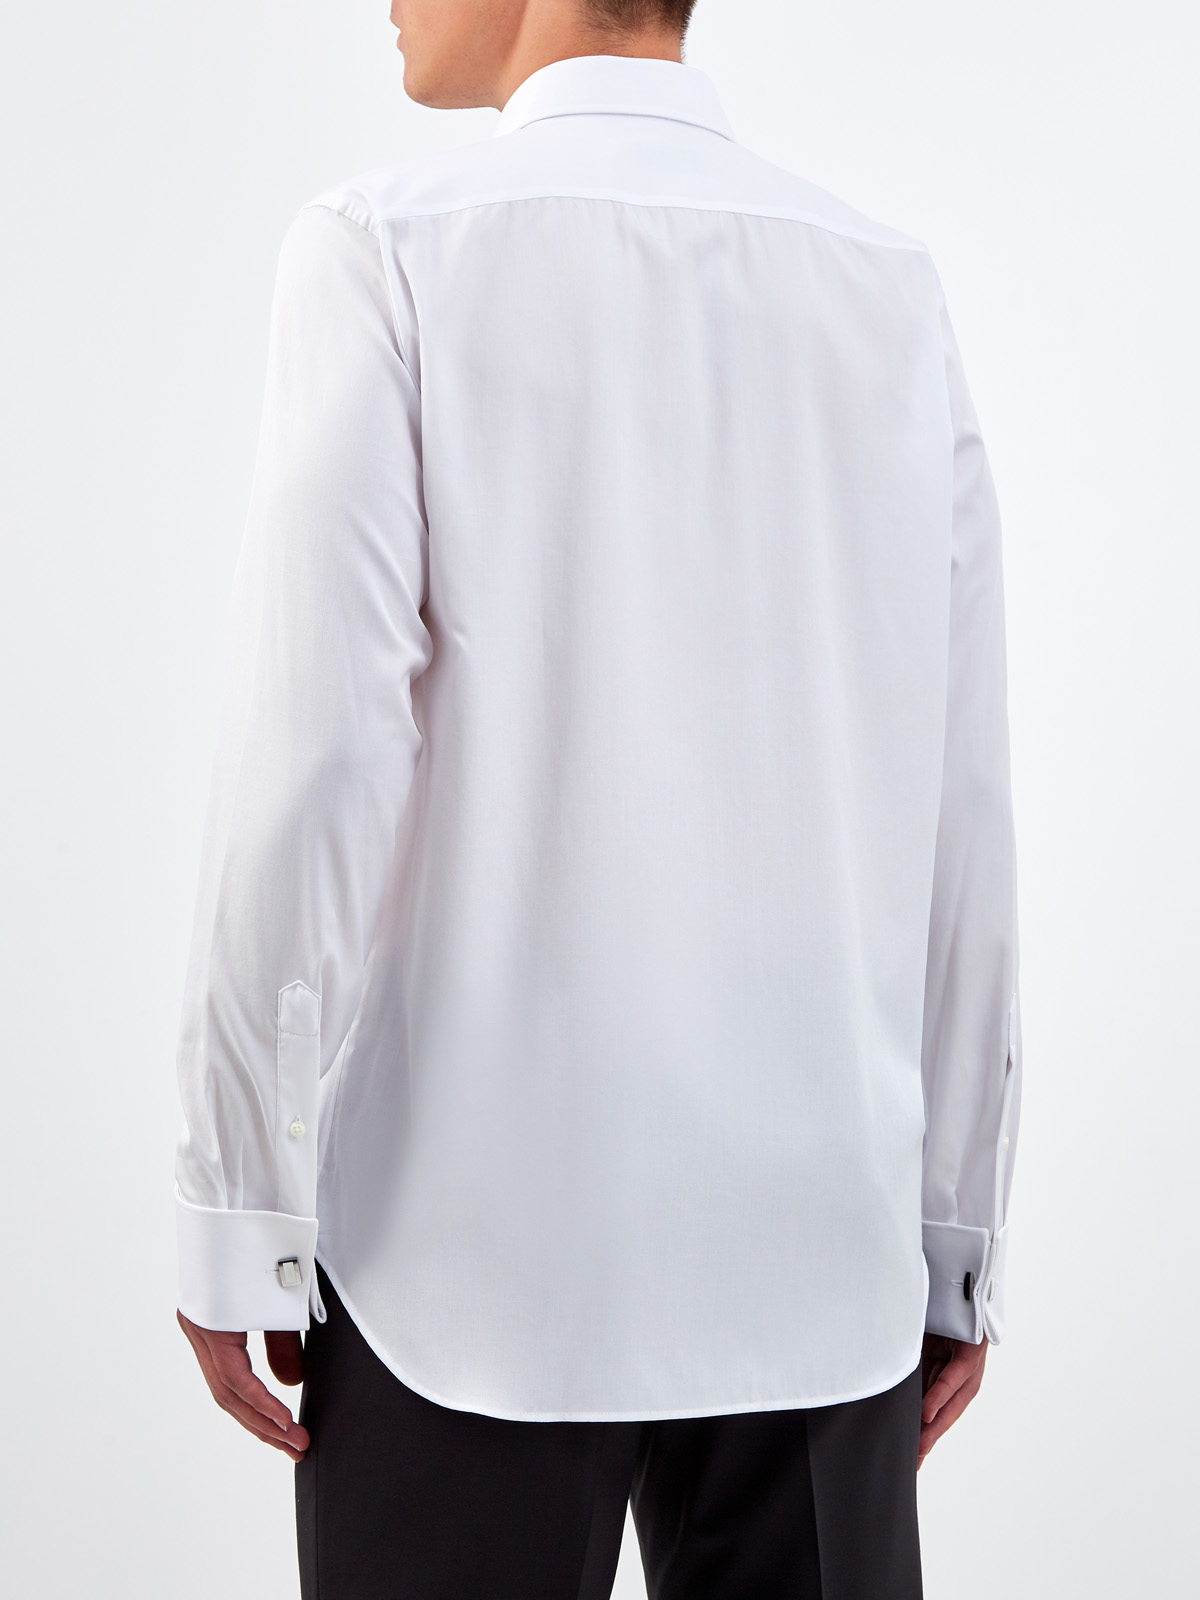 Рубашка из поплина Impeccabile с манжетами под запонки CANALI, цвет белый, размер 52;54;56;58;52 - фото 4